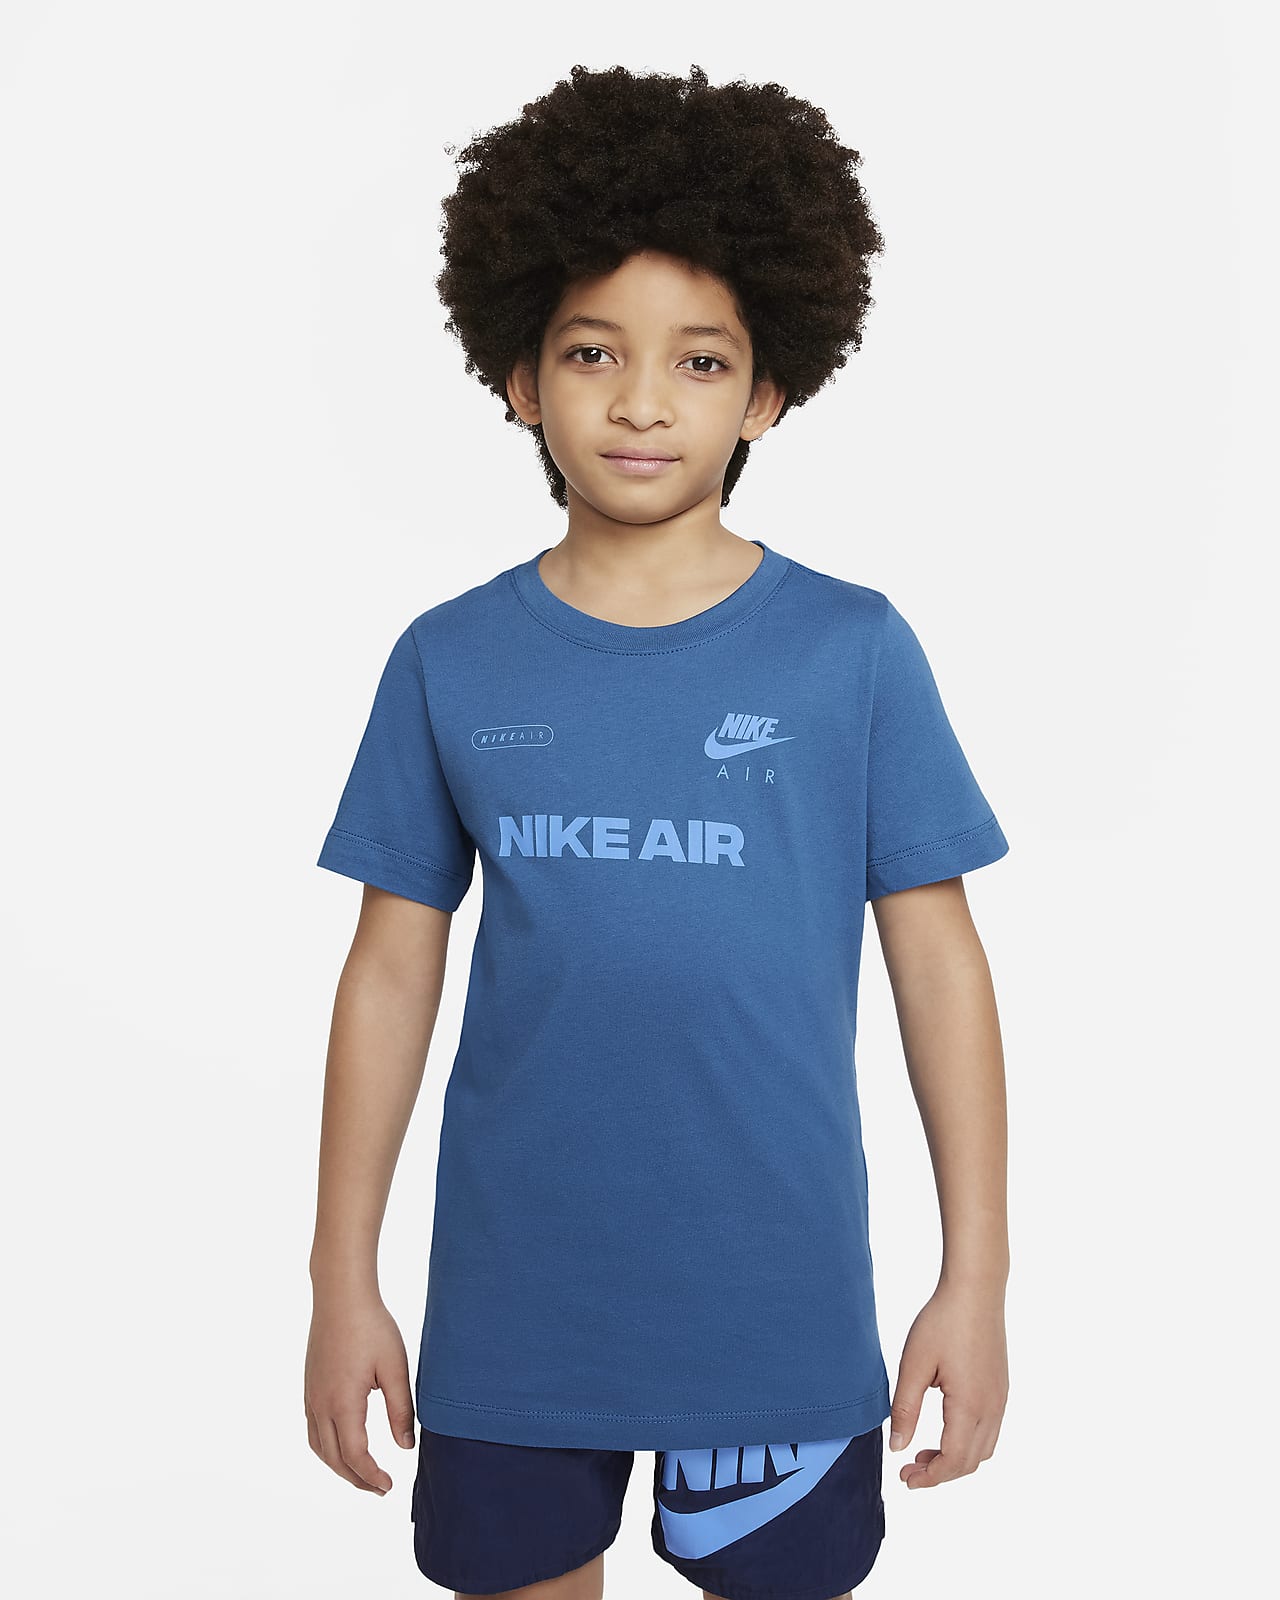 Nike Air 大童 (男童) T 恤